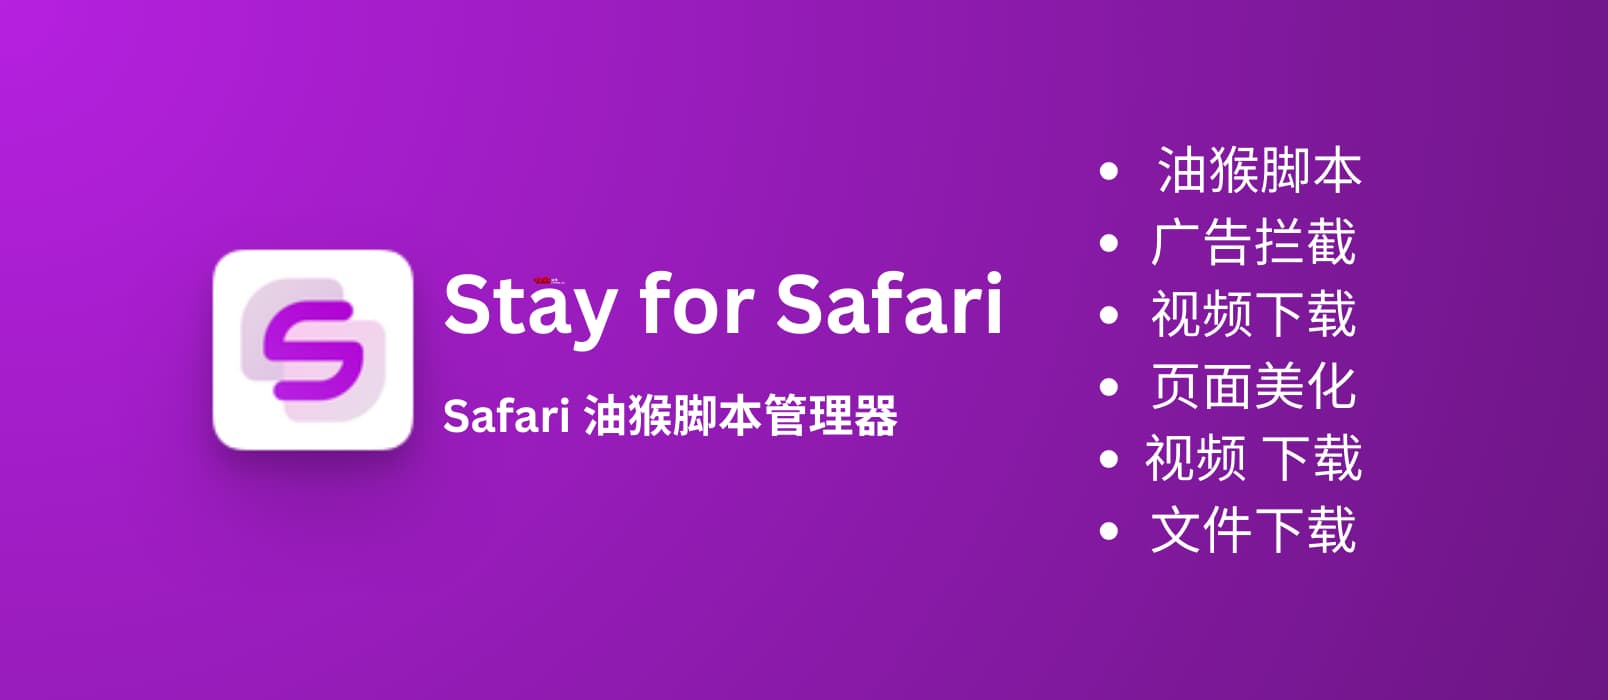 Stay for Safari – 油猴脚本、广告拦截、视频下载、页面美化等 7 个功能的 Safari 扩展[iOS/macOS]